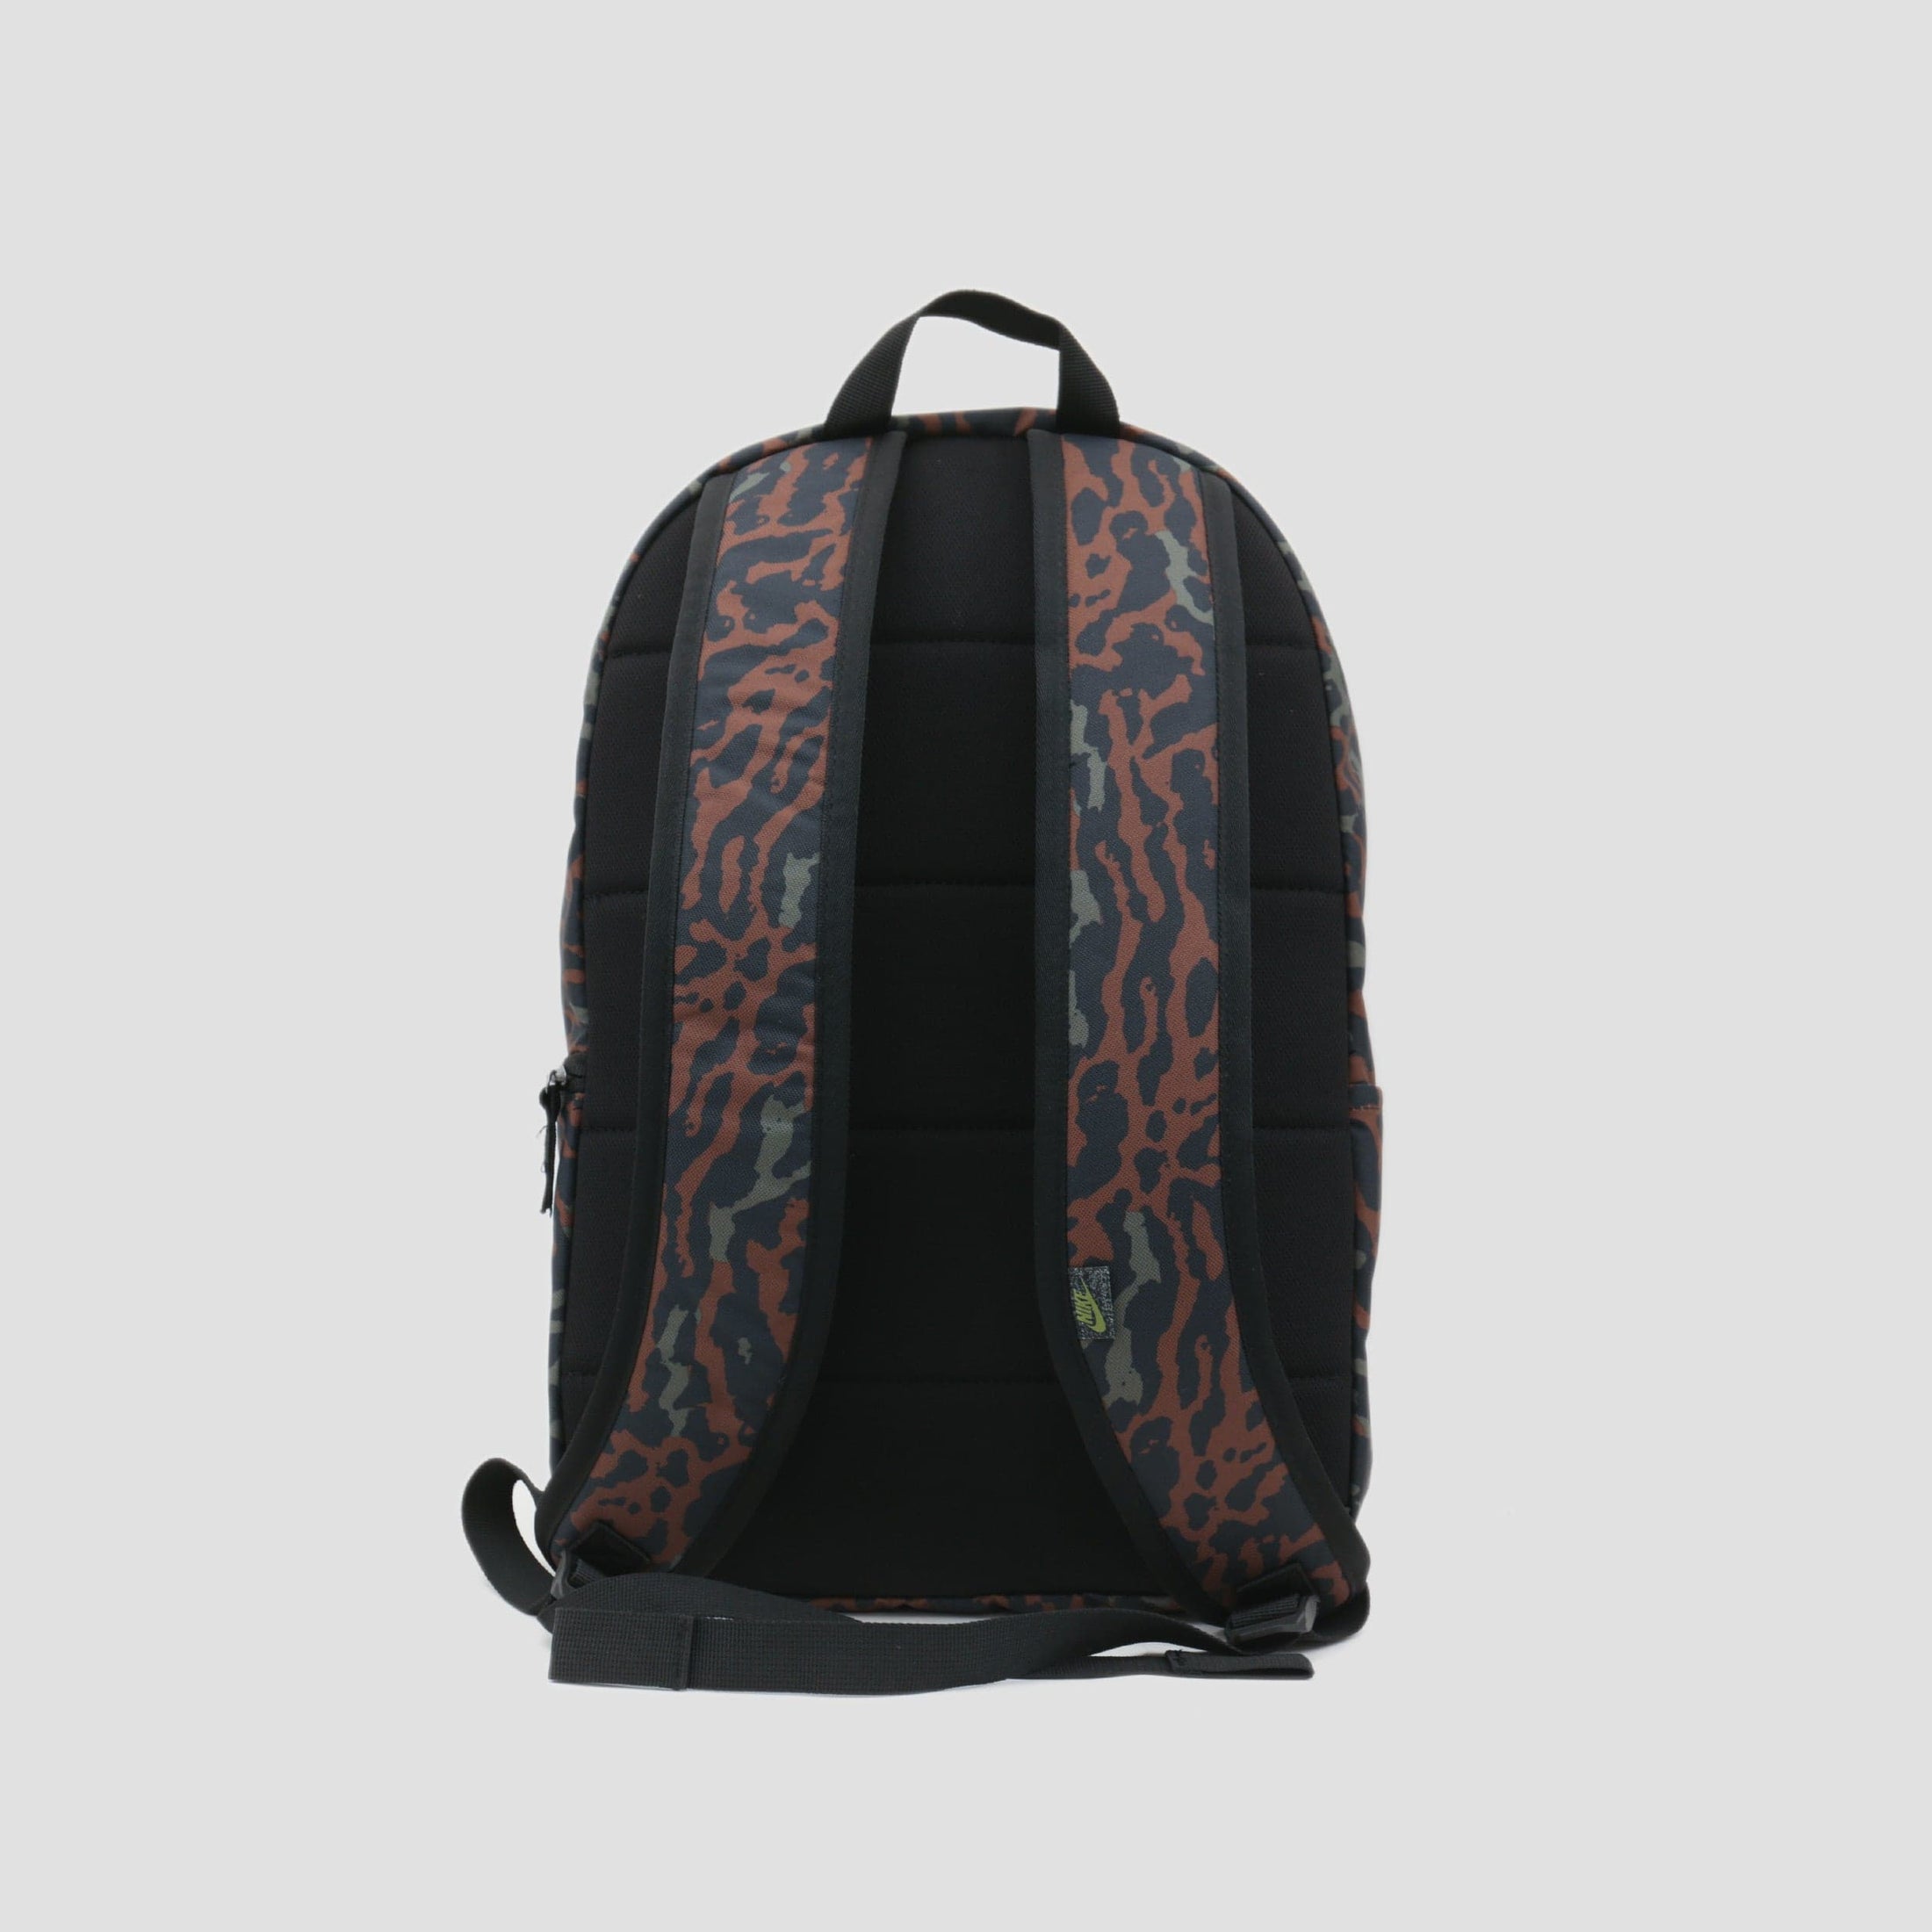 Nike Heritage Backpack Black / Oil Green